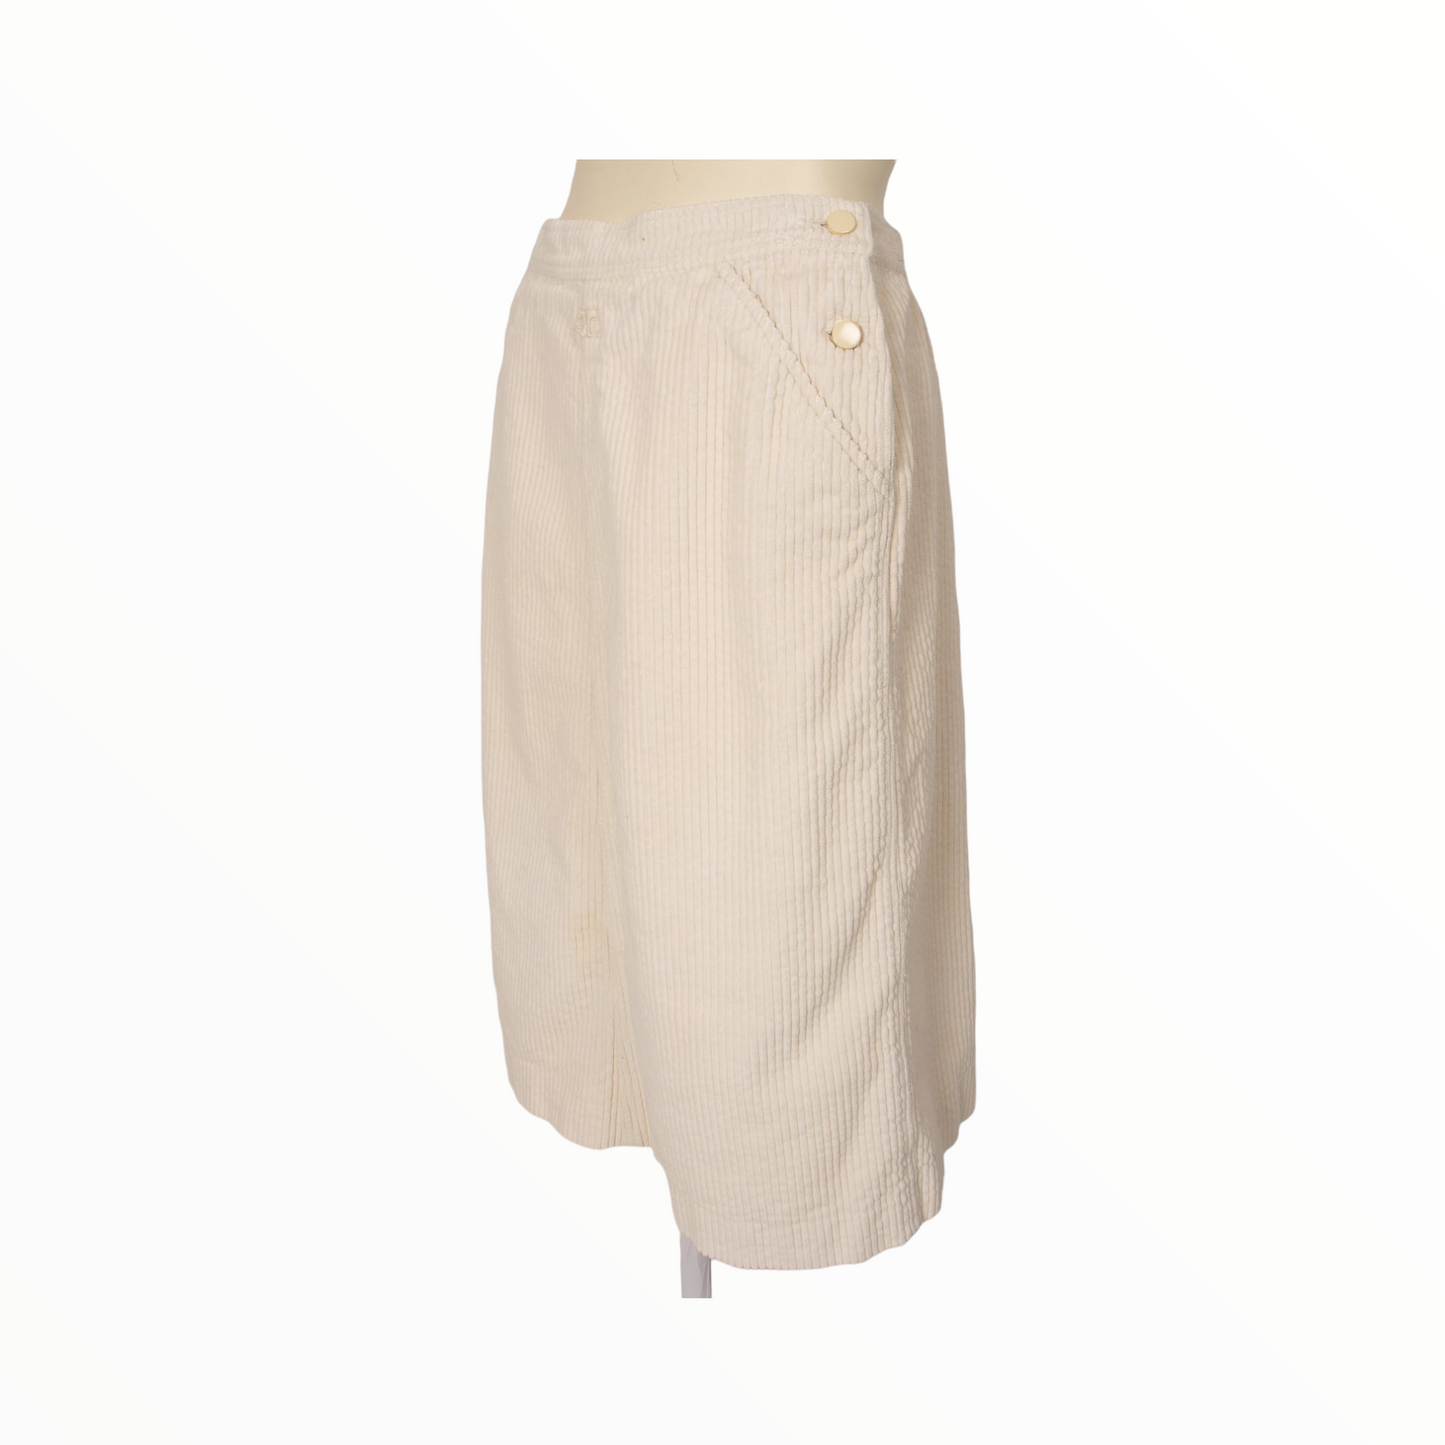 Courrèges vintage skirt in ecru corduroy - M - 1970s